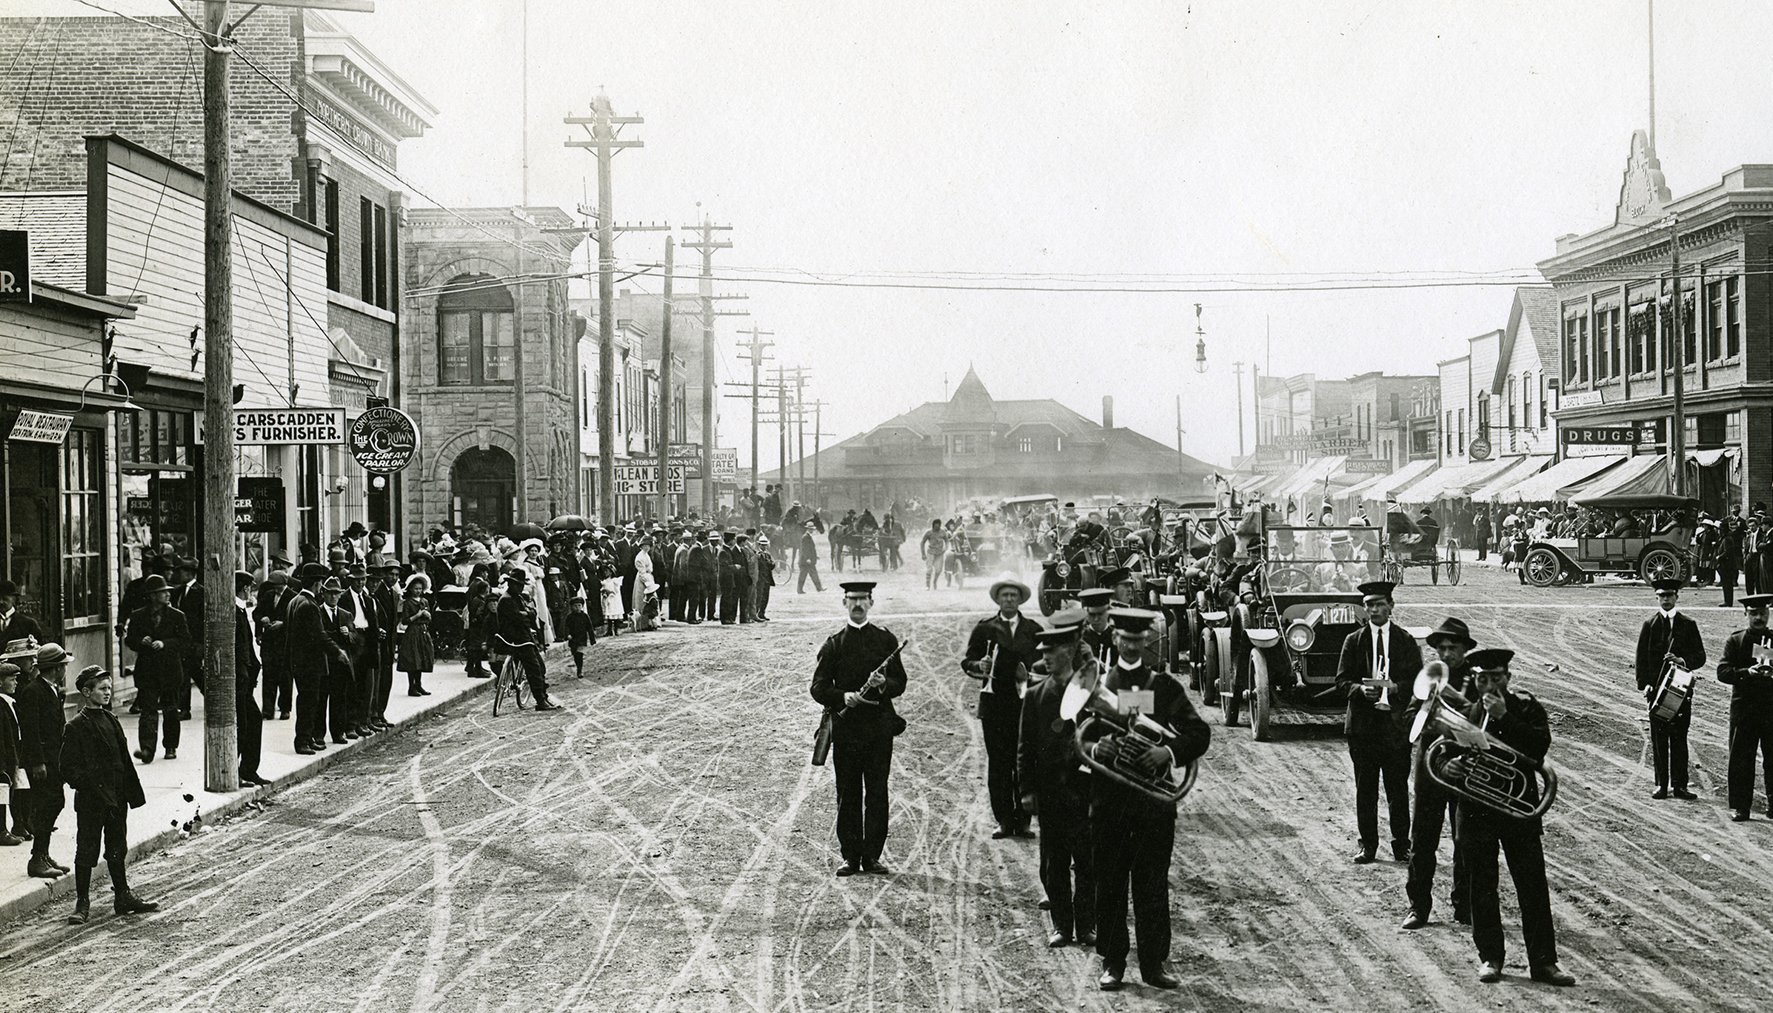 Automobile Club parade on Ross Street, 1912